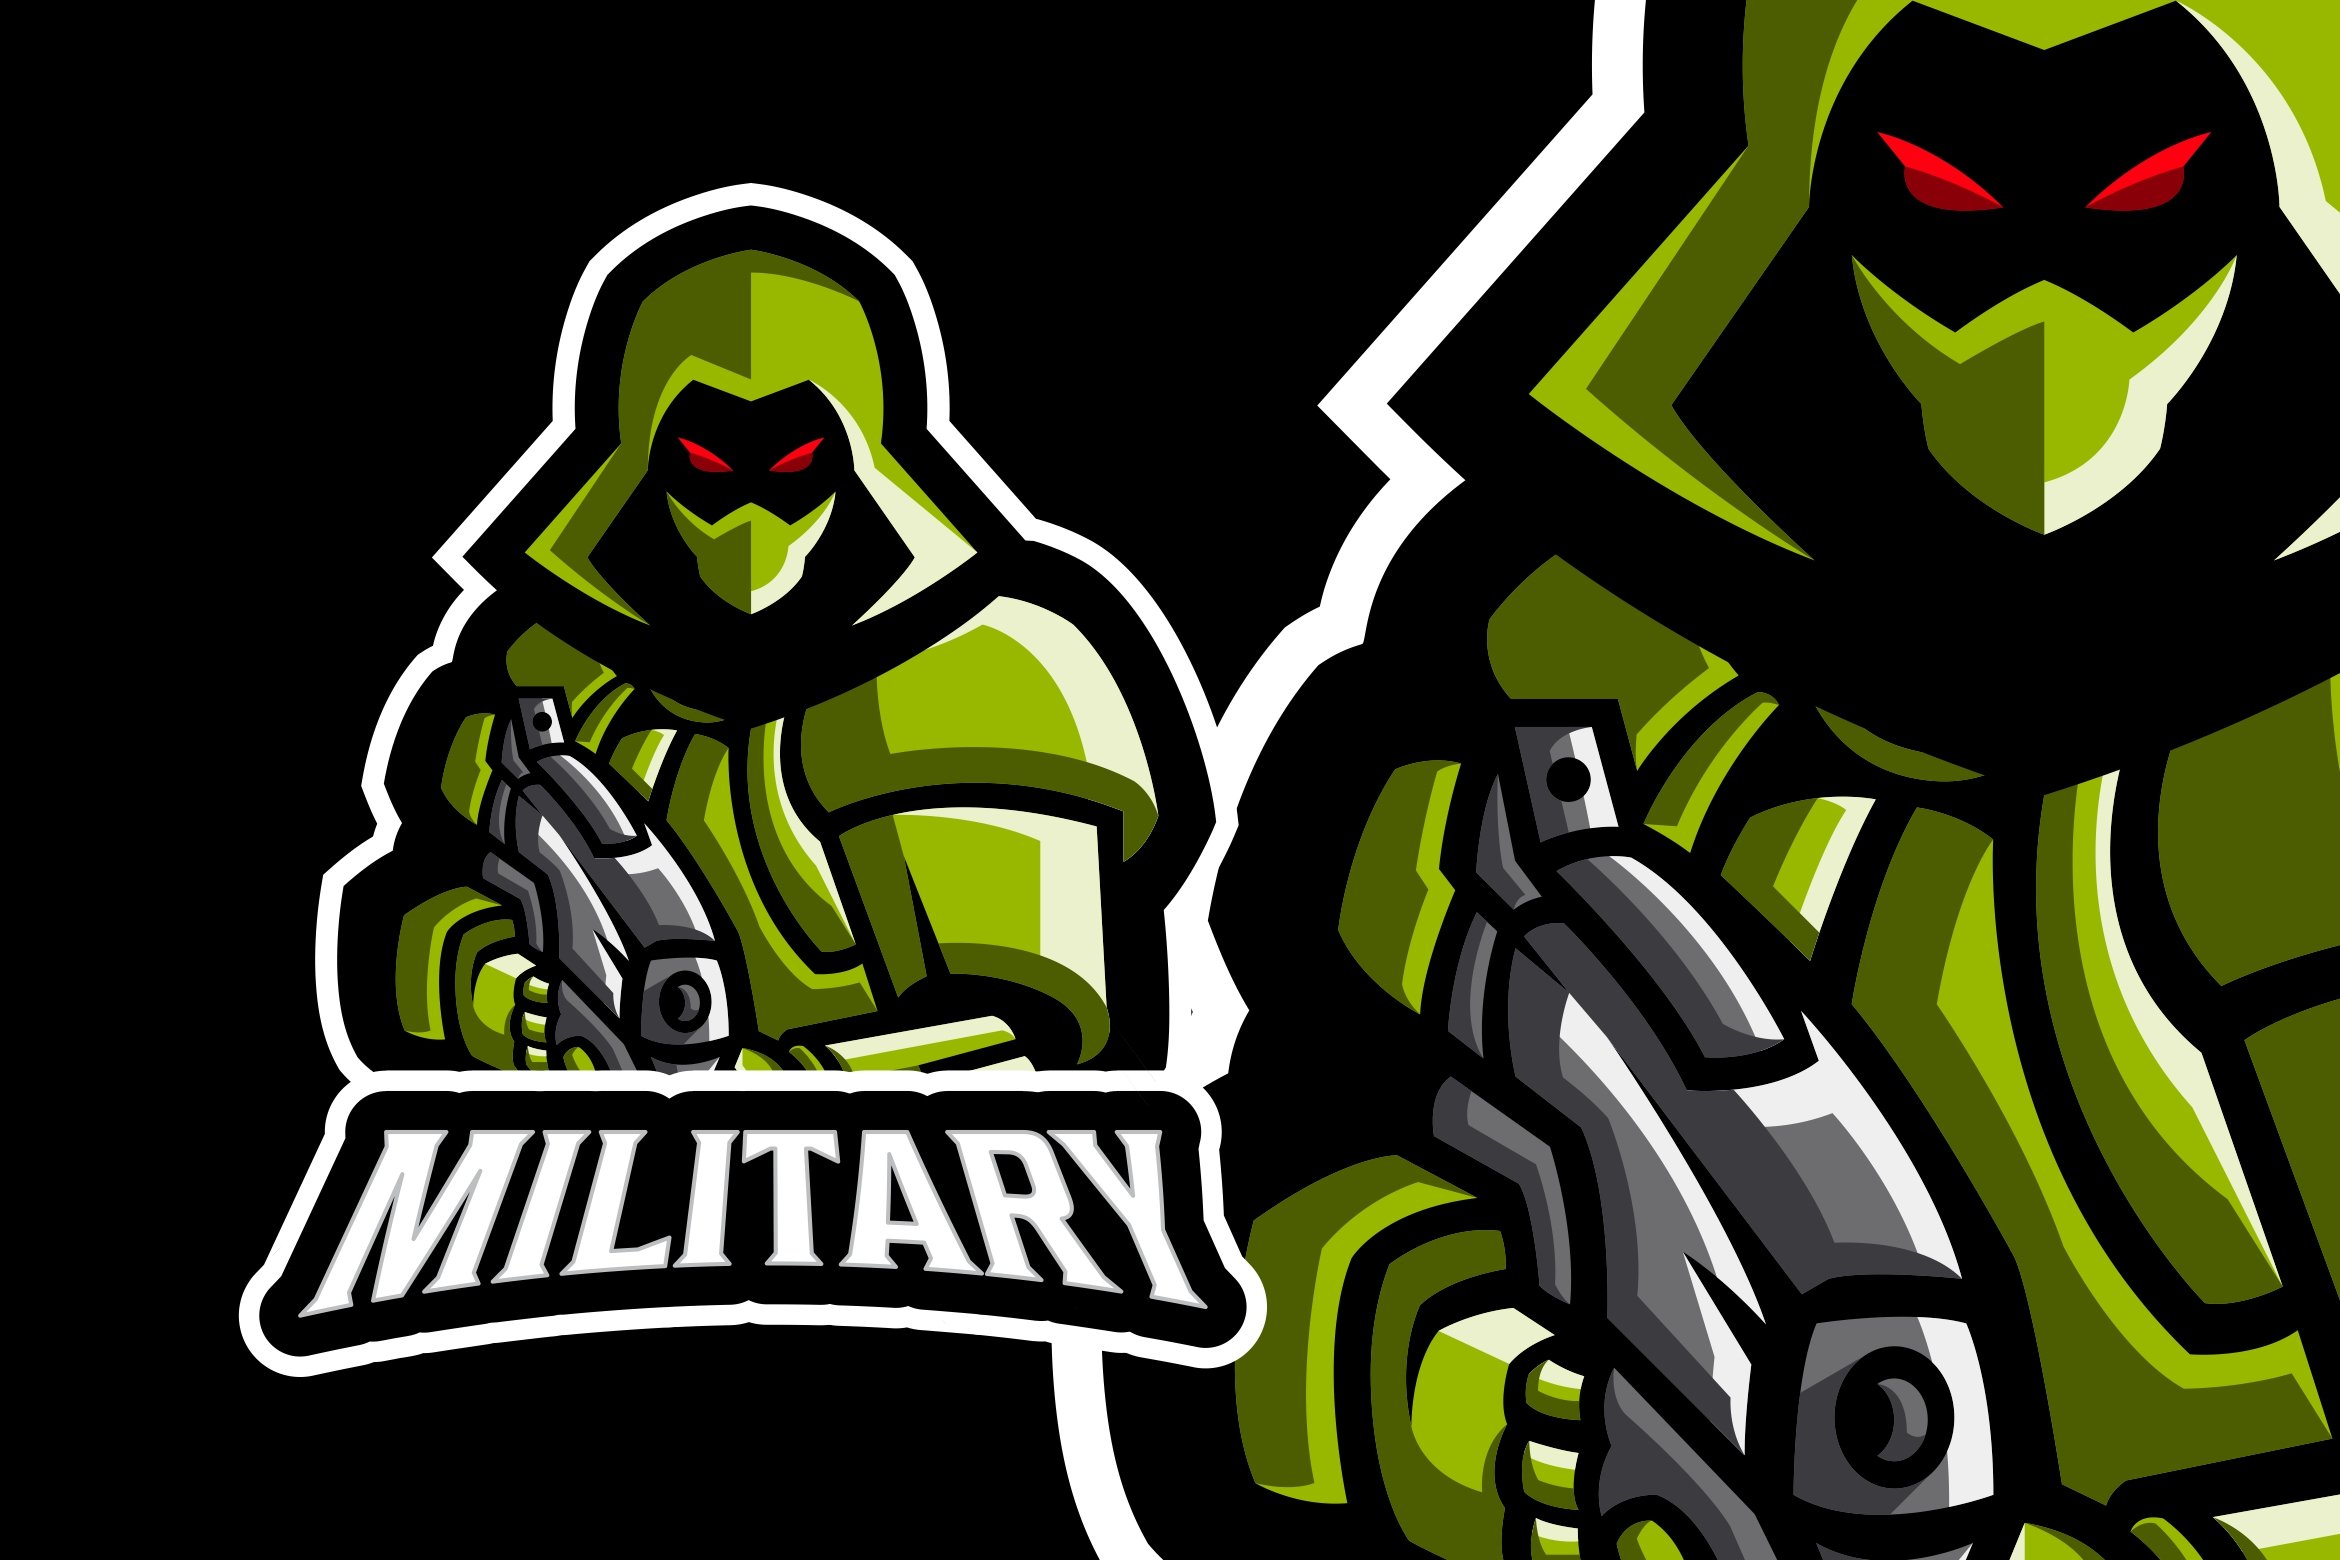 Green Military Mascot Esport Logo cover image.